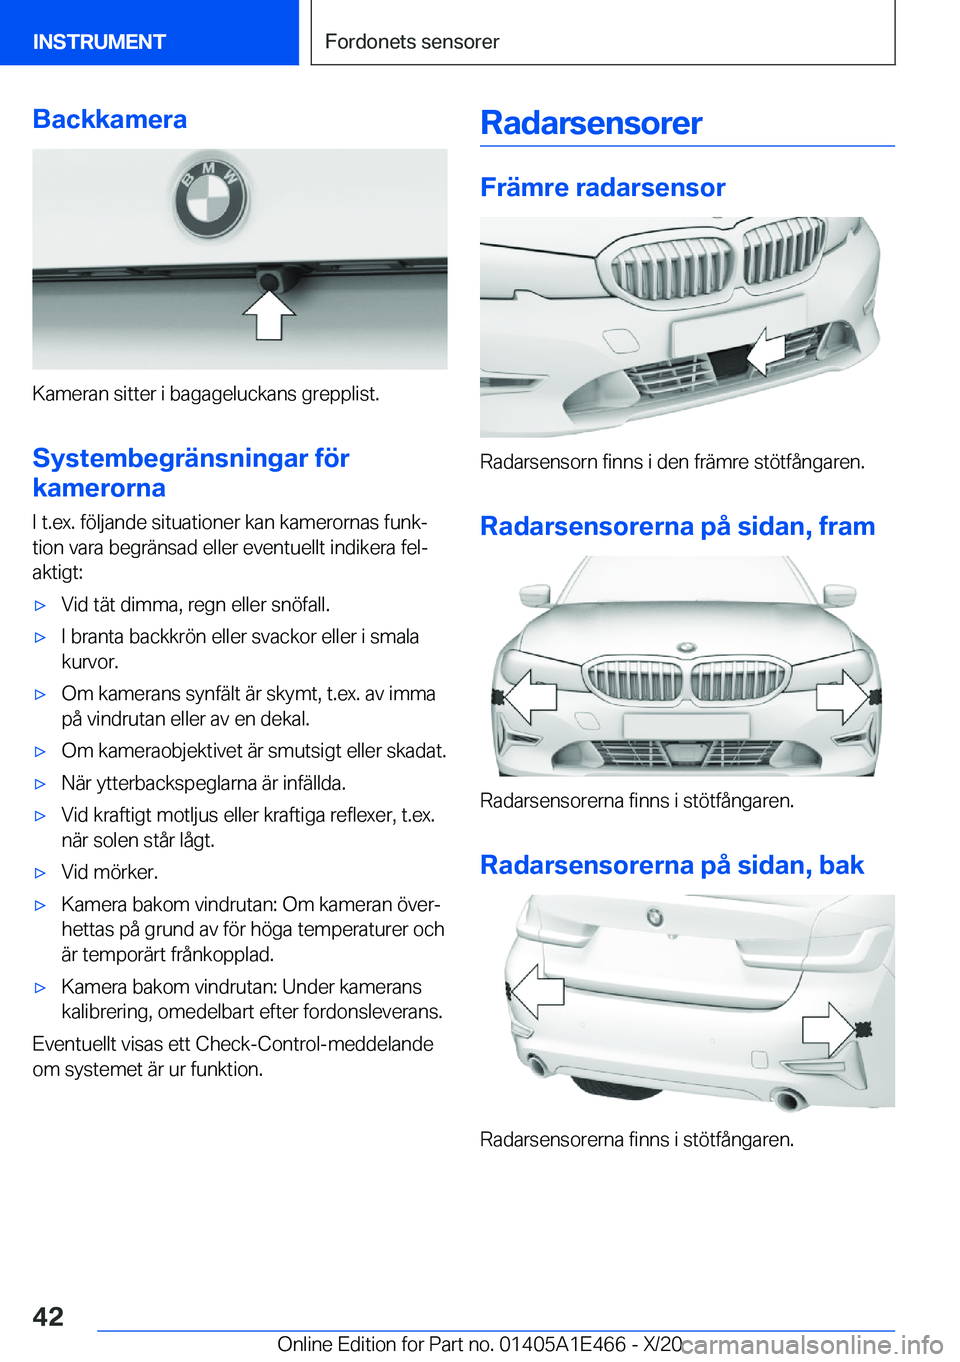 BMW M3 2021  InstruktionsbÖcker (in Swedish) �B�a�c�k�k�a�m�e�r�a
�K�a�m�e�r�a�n��s�i�t�t�e�r��i��b�a�g�a�g�e�l�u�c�k�a�n�s��g�r�e�p�p�l�i�s�t�.
�S�y�s�t�e�m�b�e�g�r�ä�n�s�n�i�n�g�a�r��f�